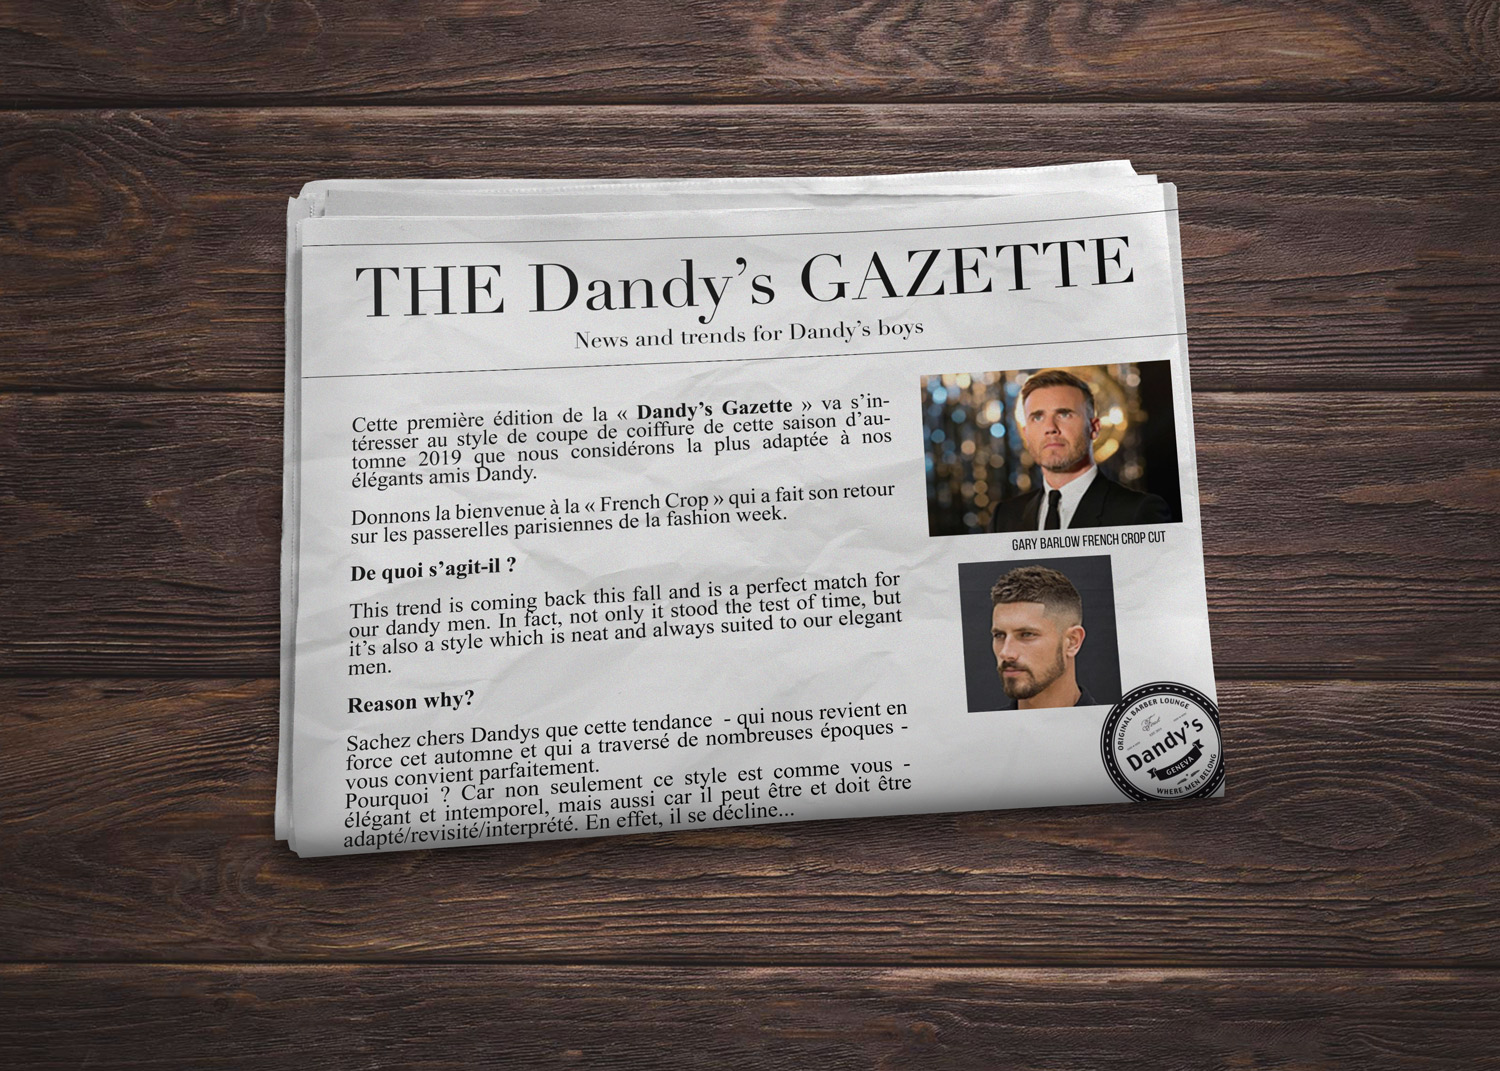 Dandy’s Gazette – The French Crop